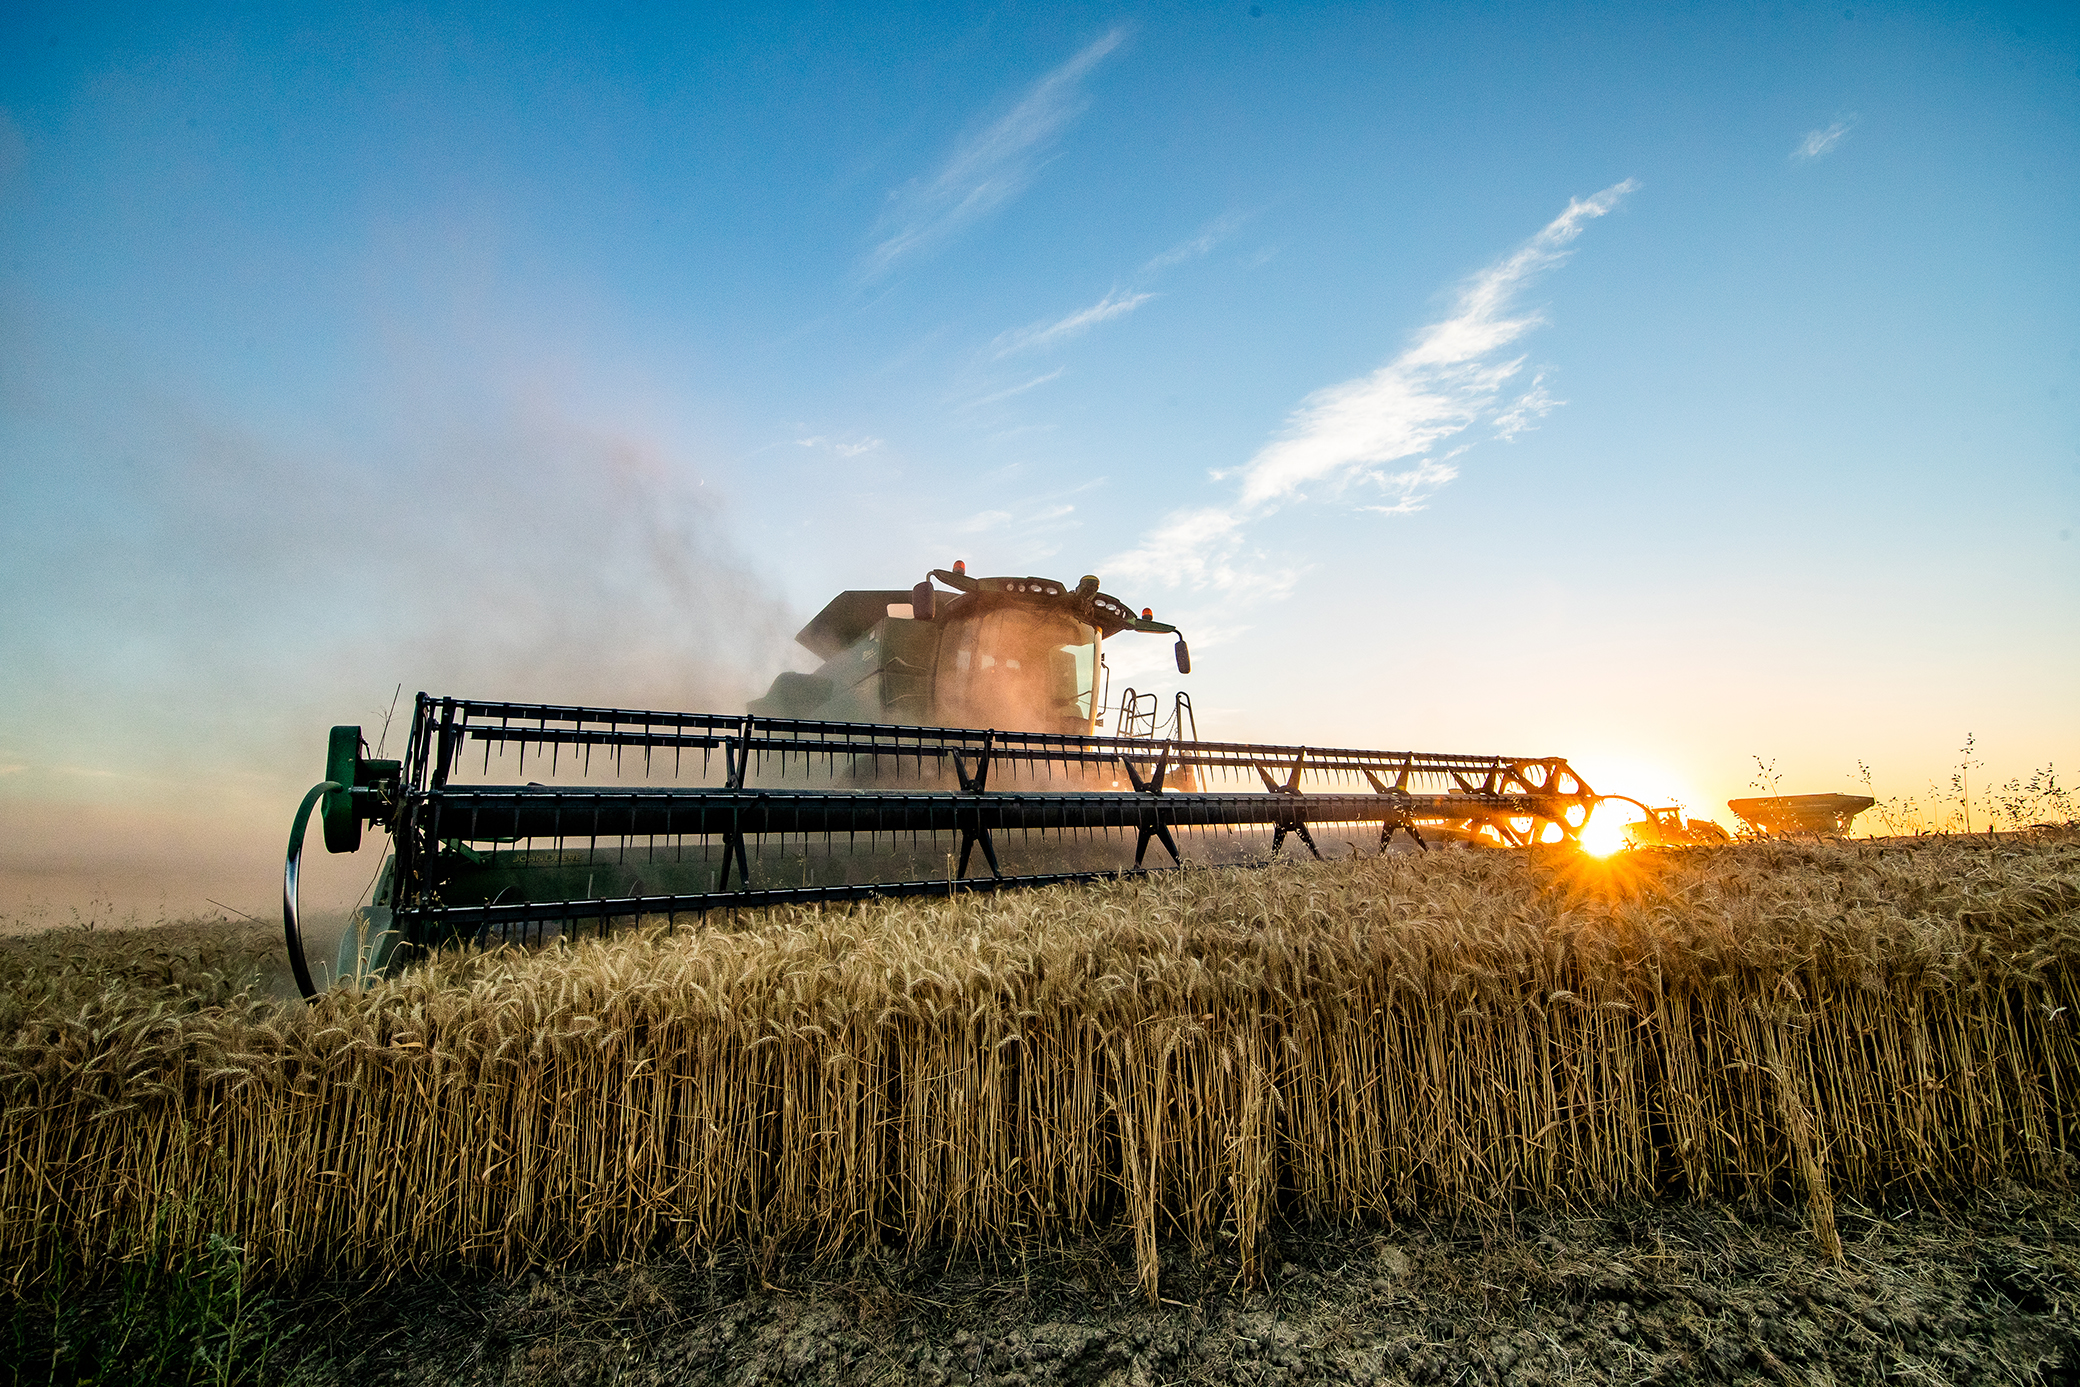 Beautiful sunset image of harvester harvesting wheat